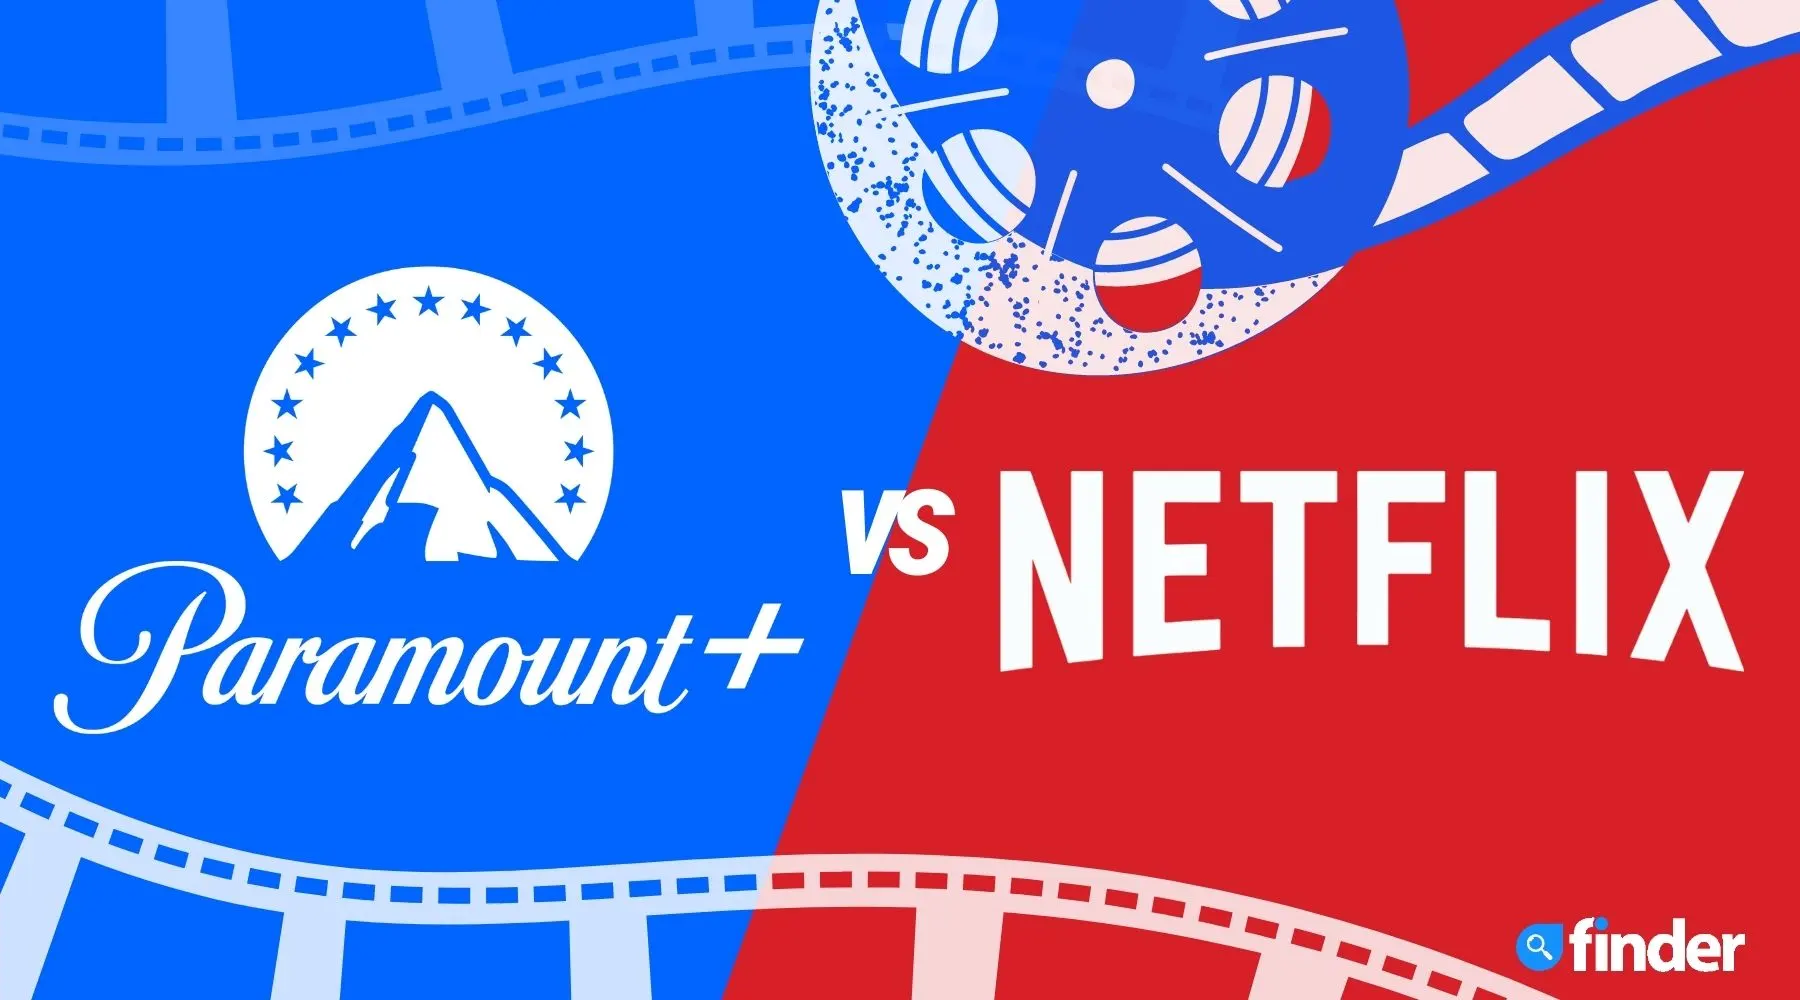 Paramount Plus vs Netflix